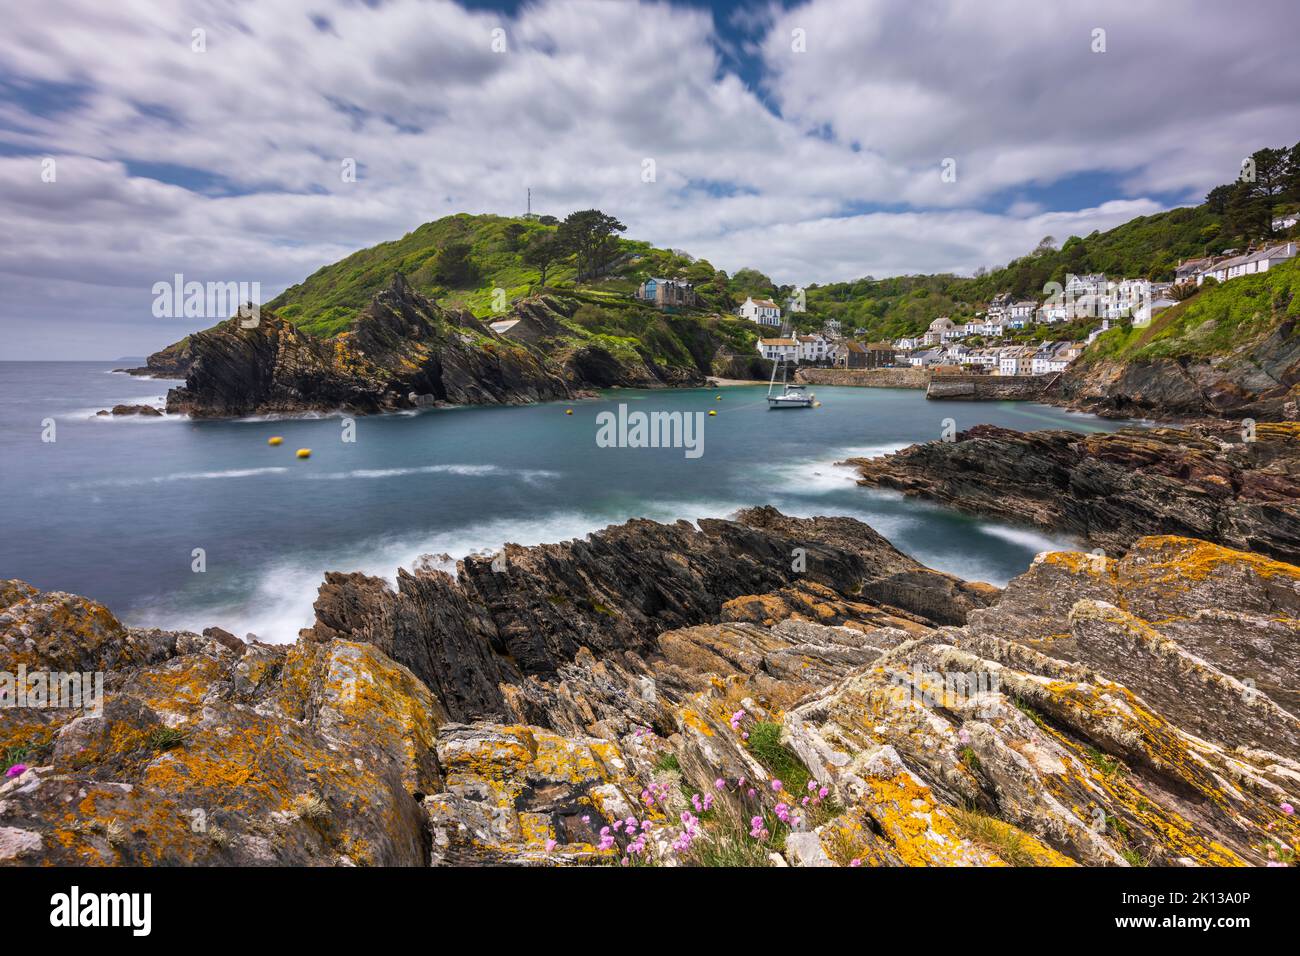 Beautiful Cornish fishing village of Polperro, nestled between the cliffs on the South coast of Cornwall, England, United Kingdom, Europe Stock Photo